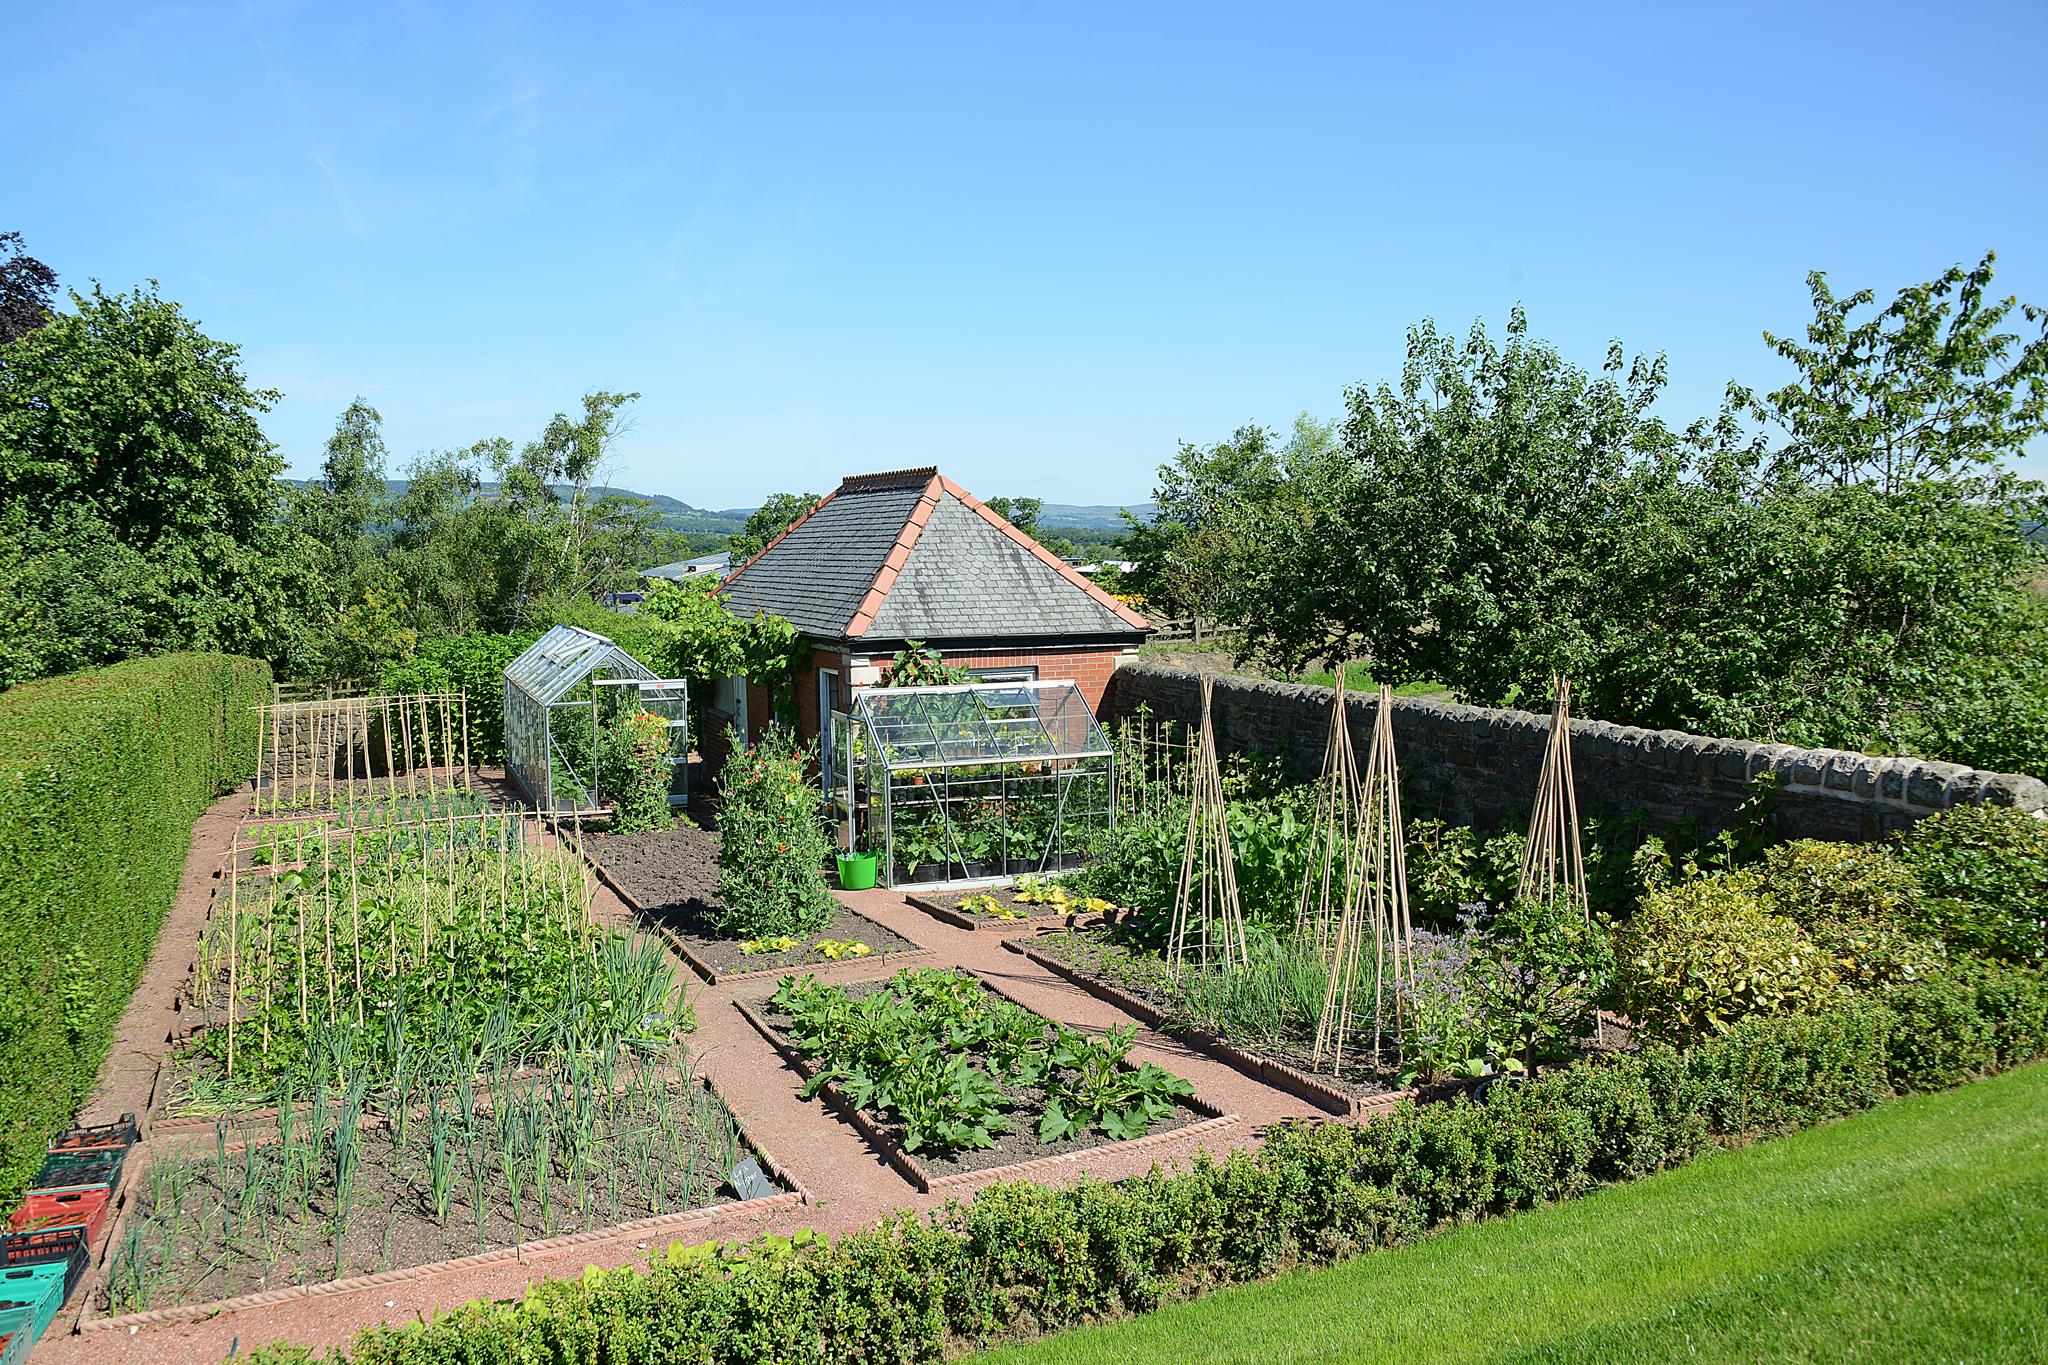 The kitchen garden at Northcote